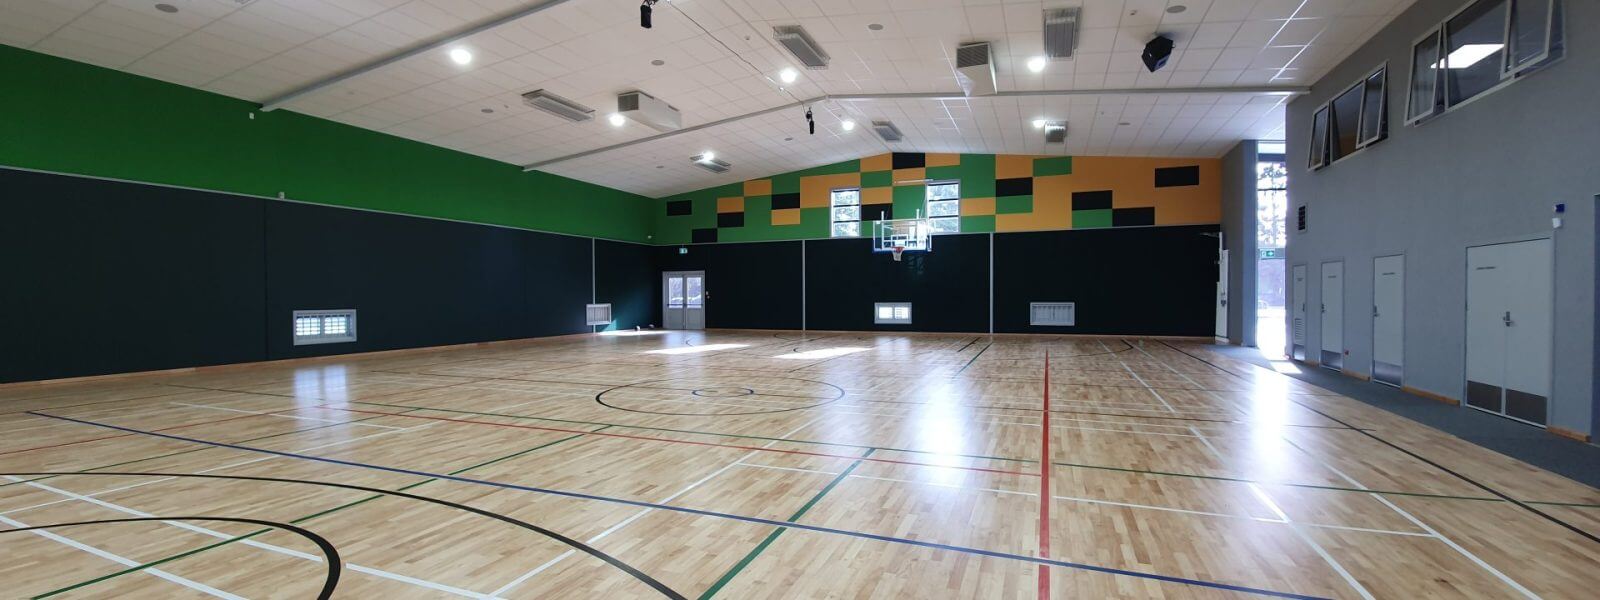 Tauraroa Area School – New Gymnasium - Header Image